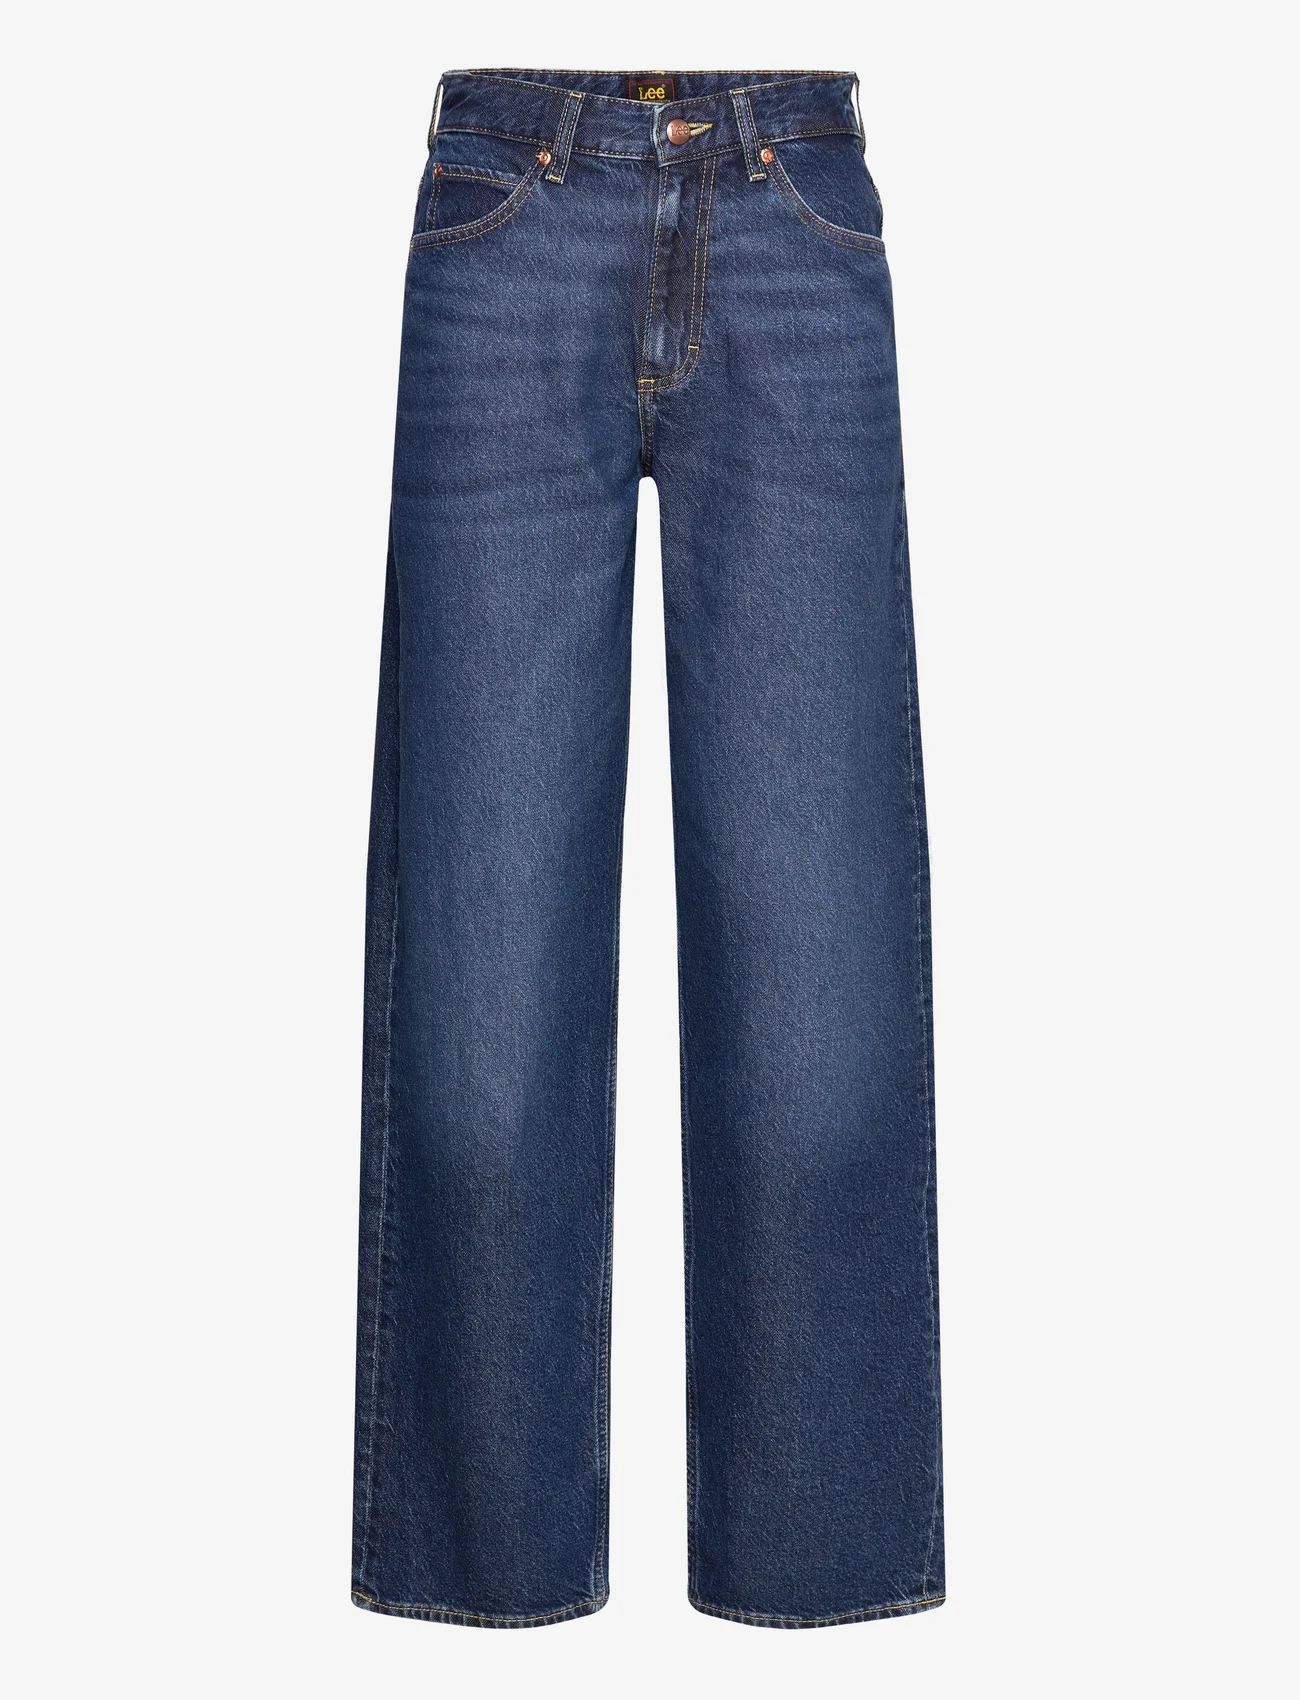 Lee Jeans - RIDER LOOSE - raka jeans - blue nostalgia - 0